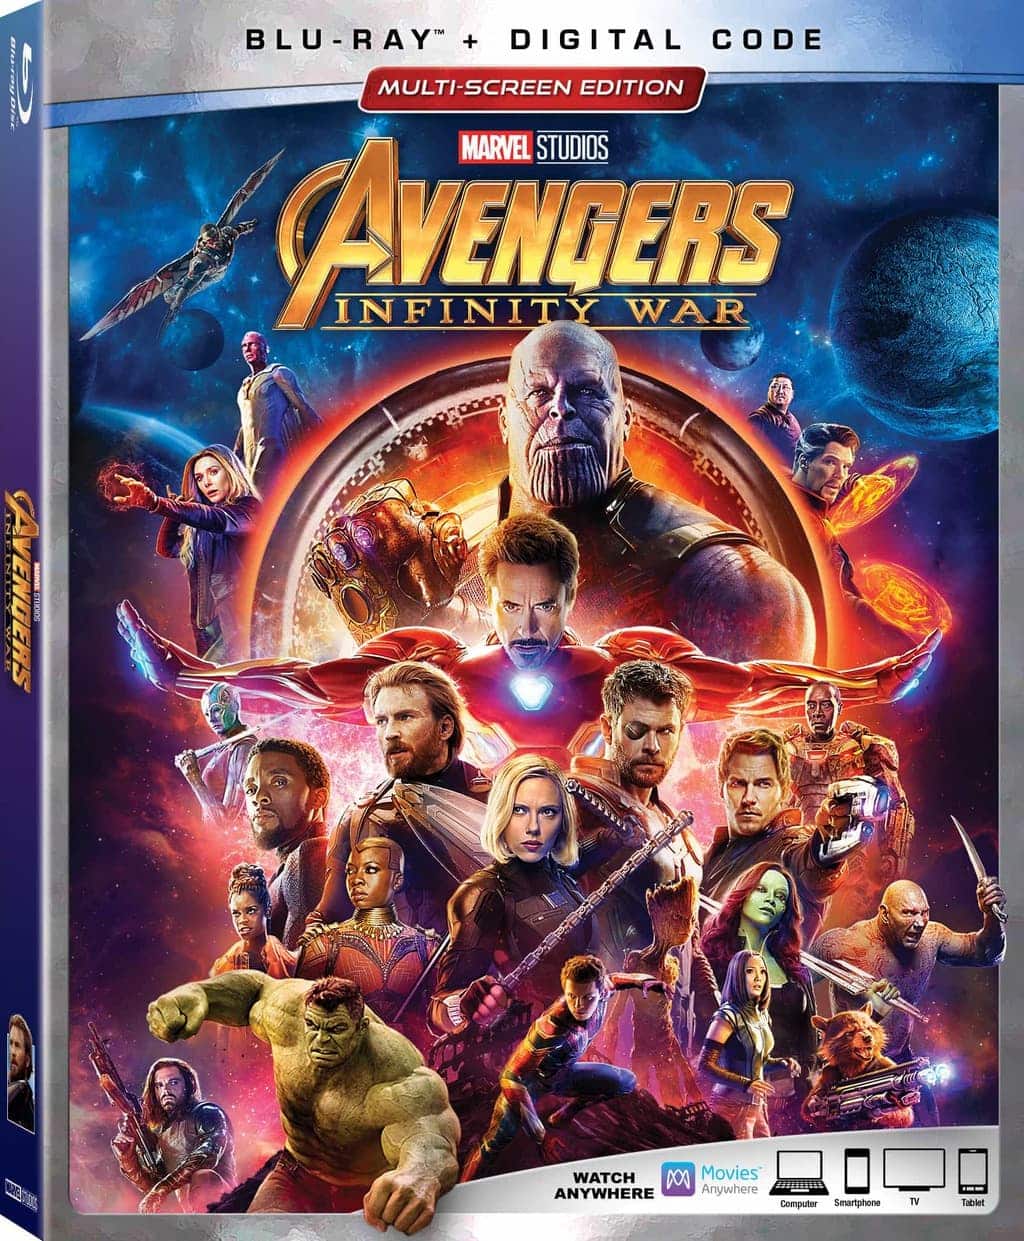 Avengers Infinity War BluRay and DVD